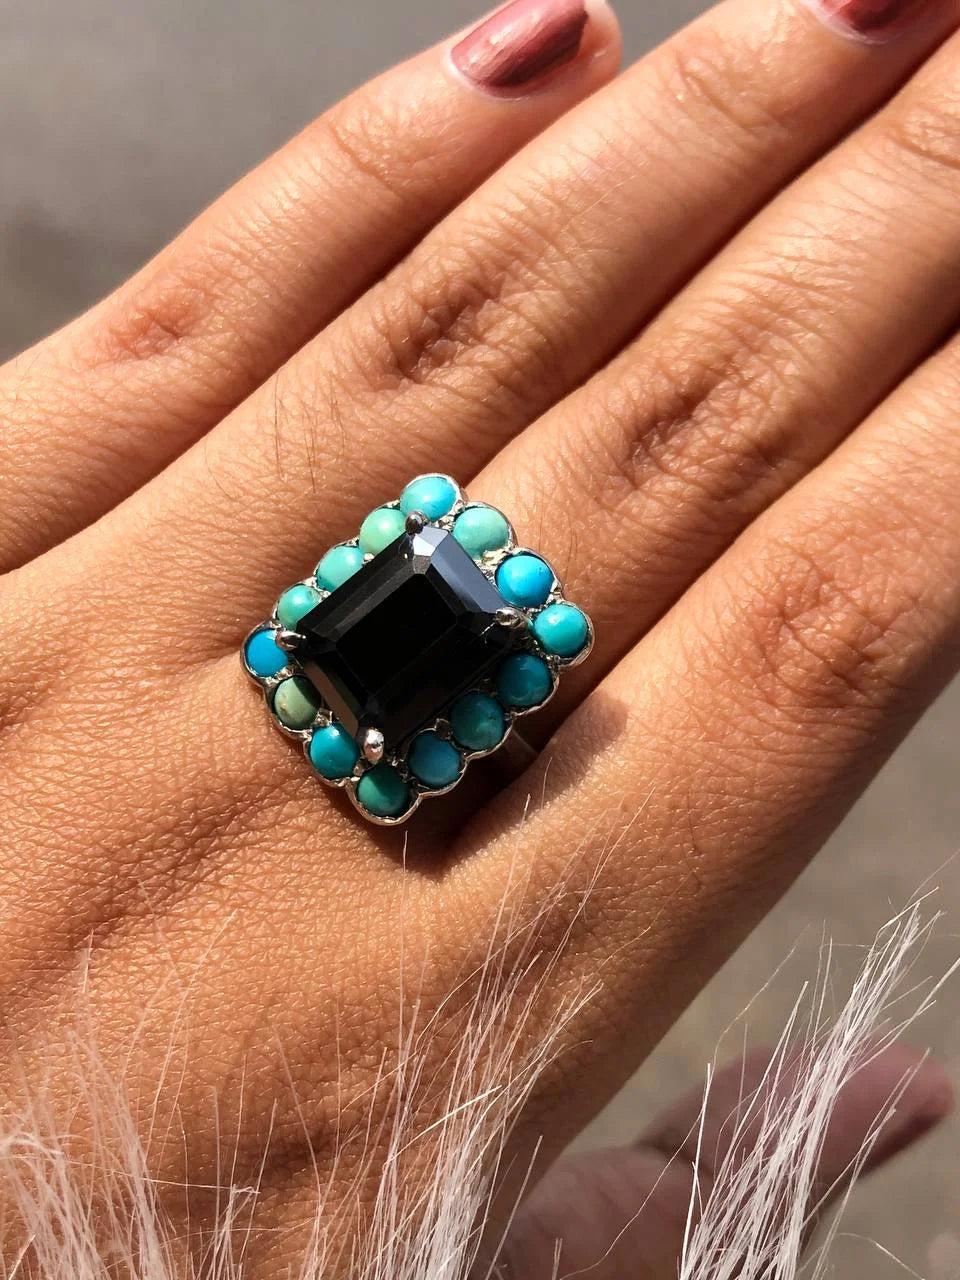 Emerald Cut Moissanite Art Deco Ring